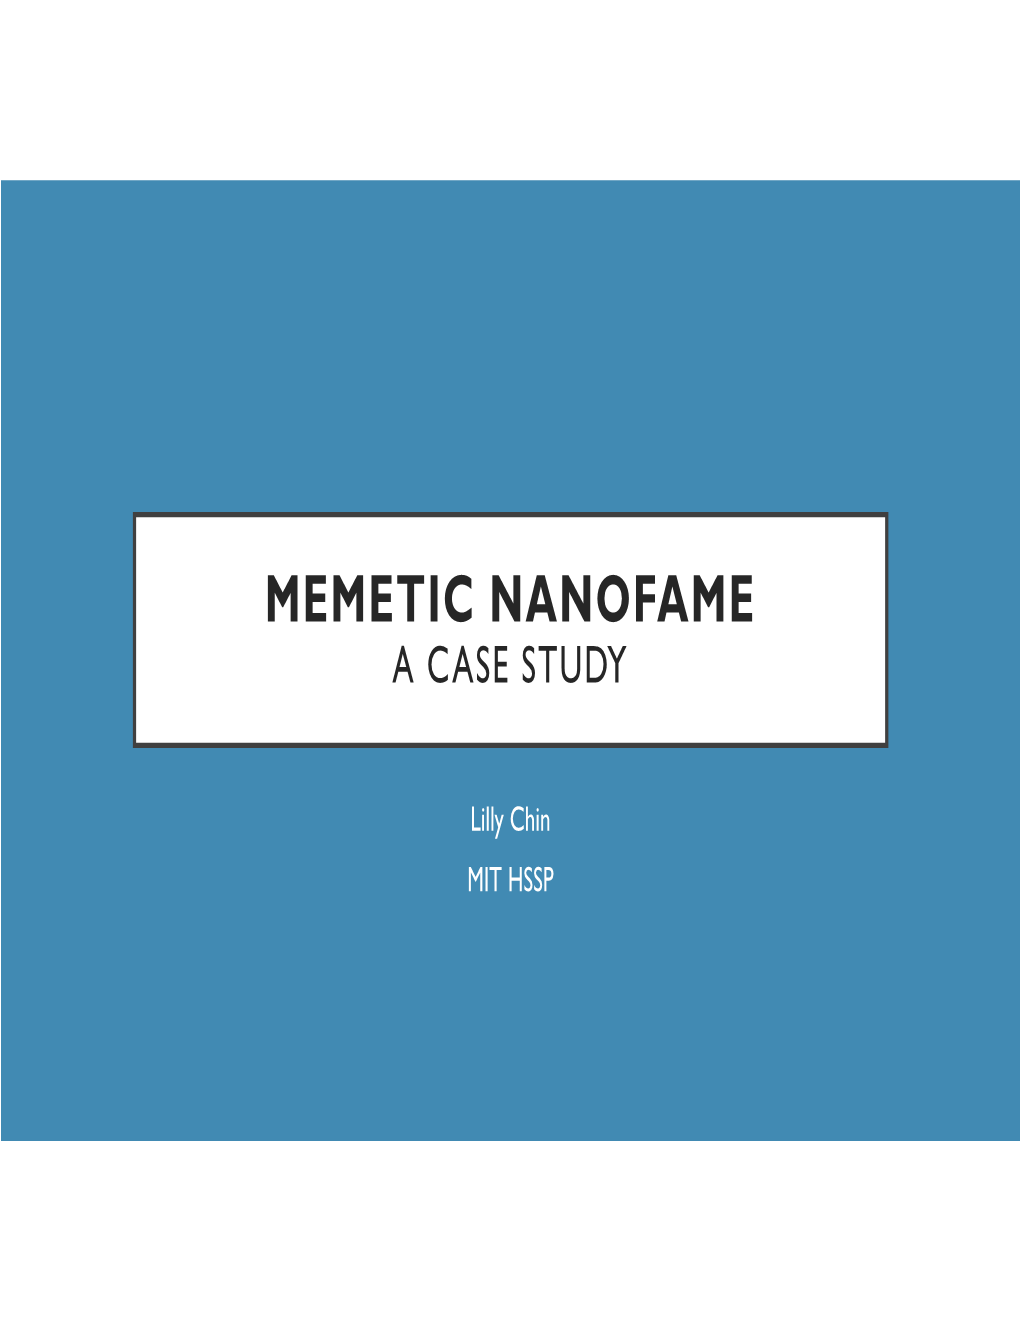 Memetic Nanofame a Case Study